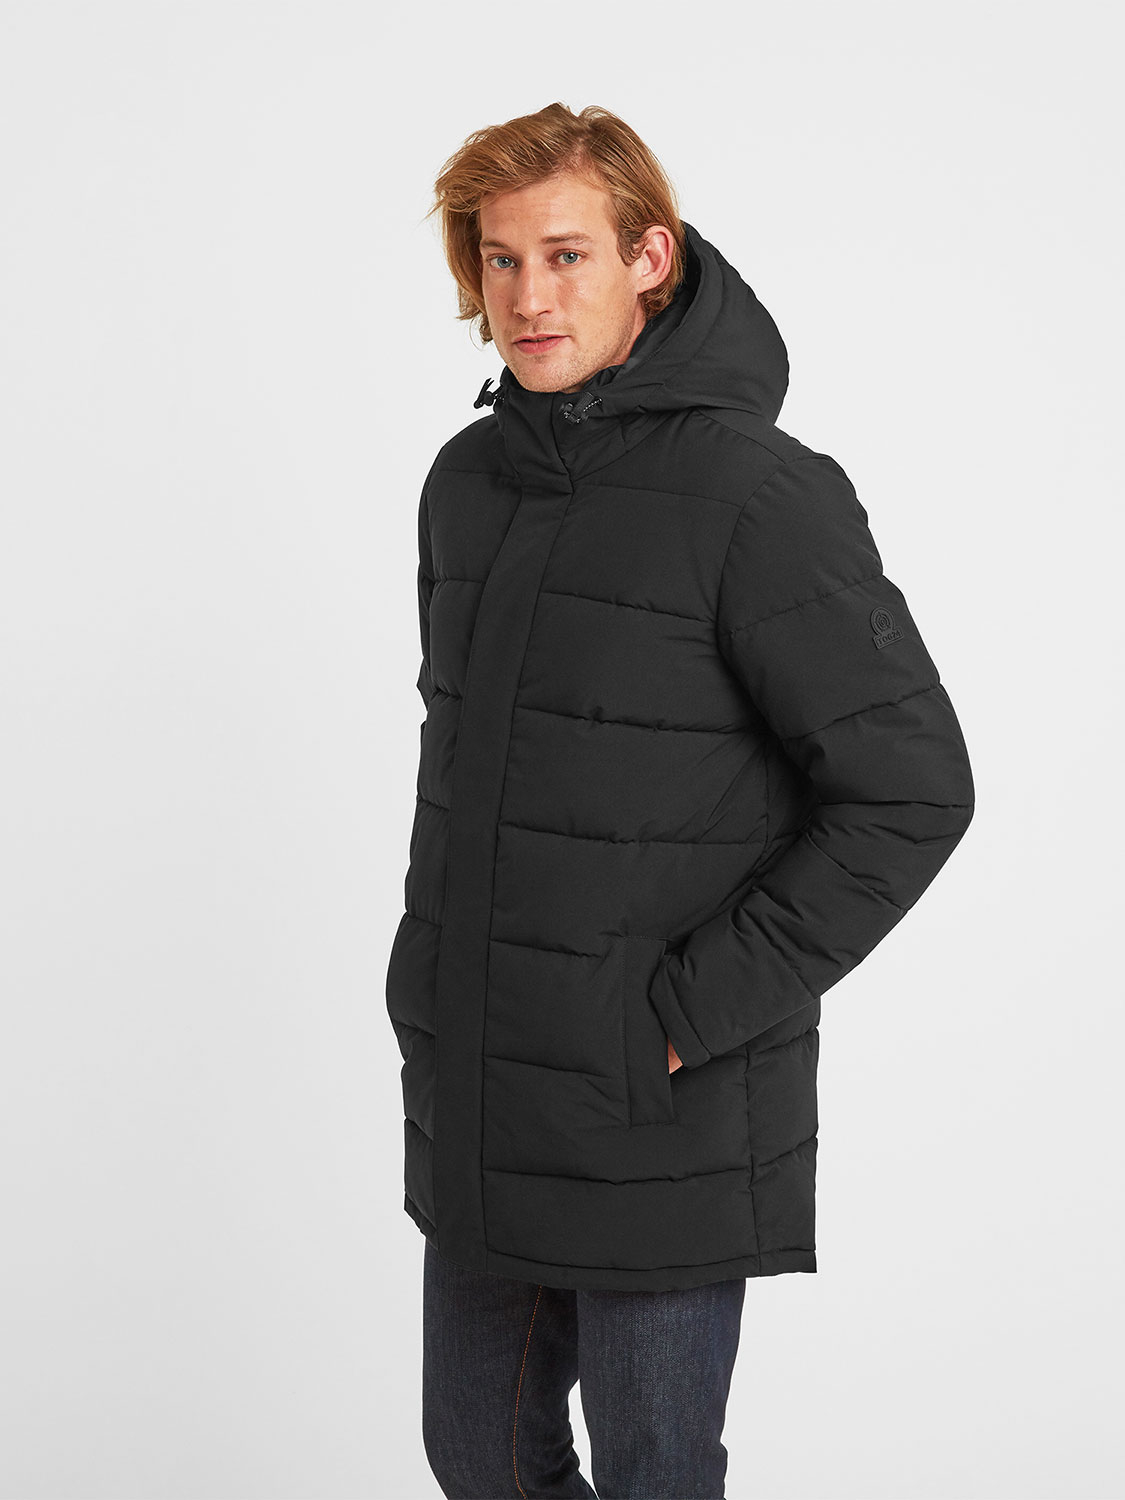 Watson Long Insulated Jacket - Size: 5XL Men’s Black Tog24